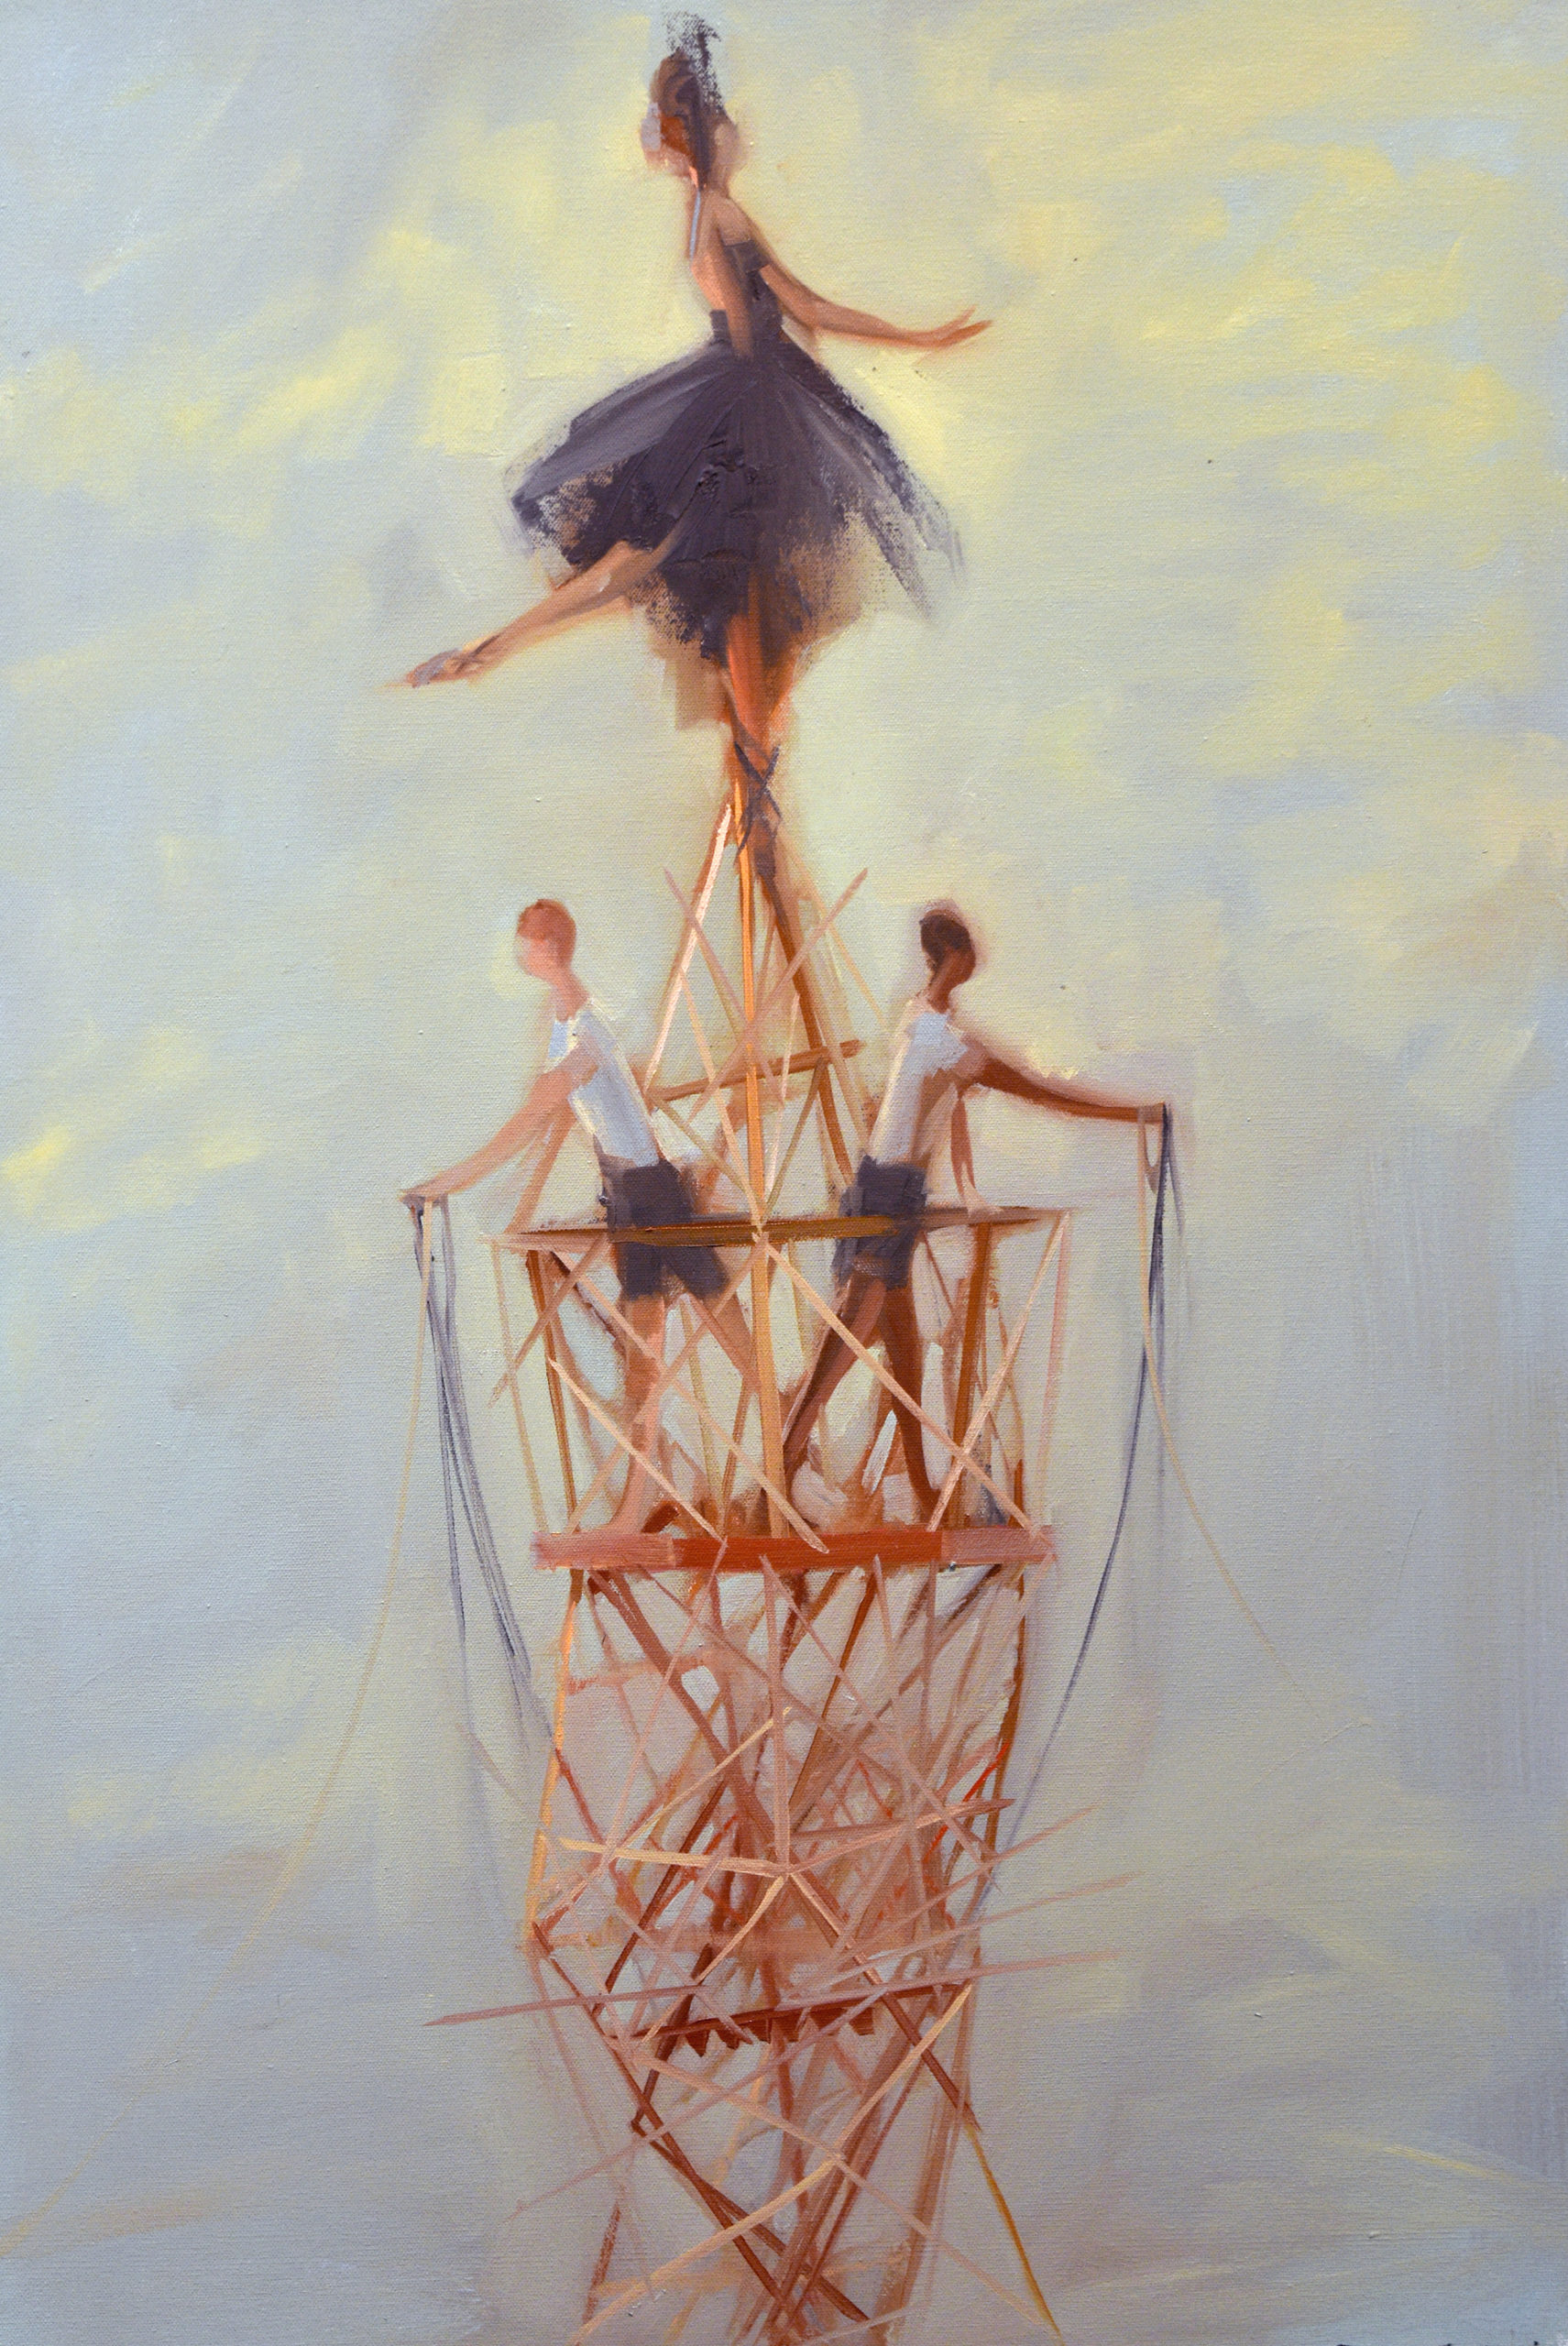 ballerina balances atop rickety scaffold, two boys drape down garlands beneath her